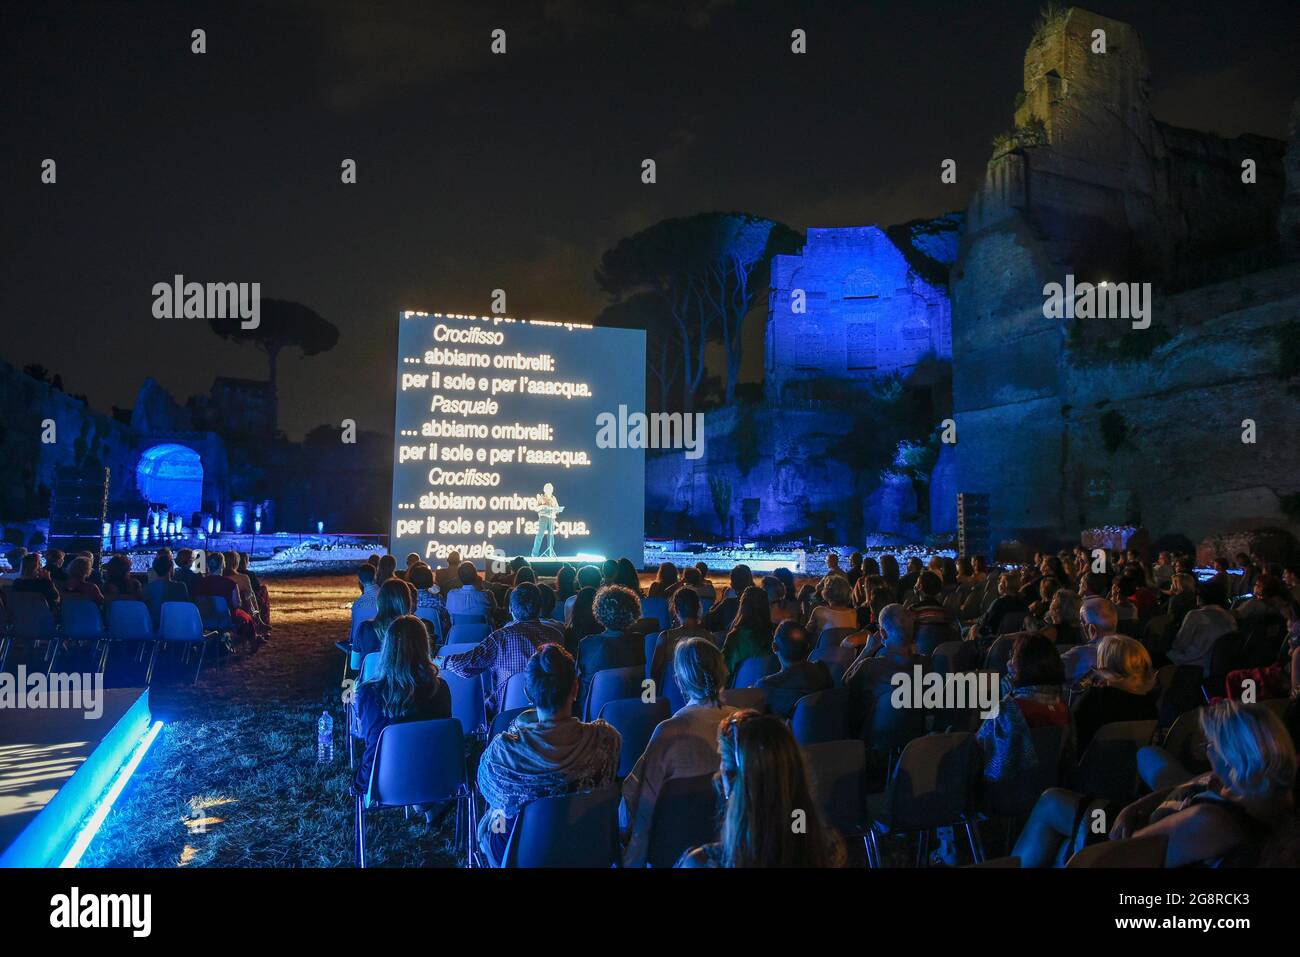 Italien, Rom, 21. Juli 2021. Das Festival delle Letterature 2021, das im alten Palatin-Stadion im forum romanum stattfindet. Foto © Fabio Mazzarella/Sintesi/Alamy Live News Stockfoto